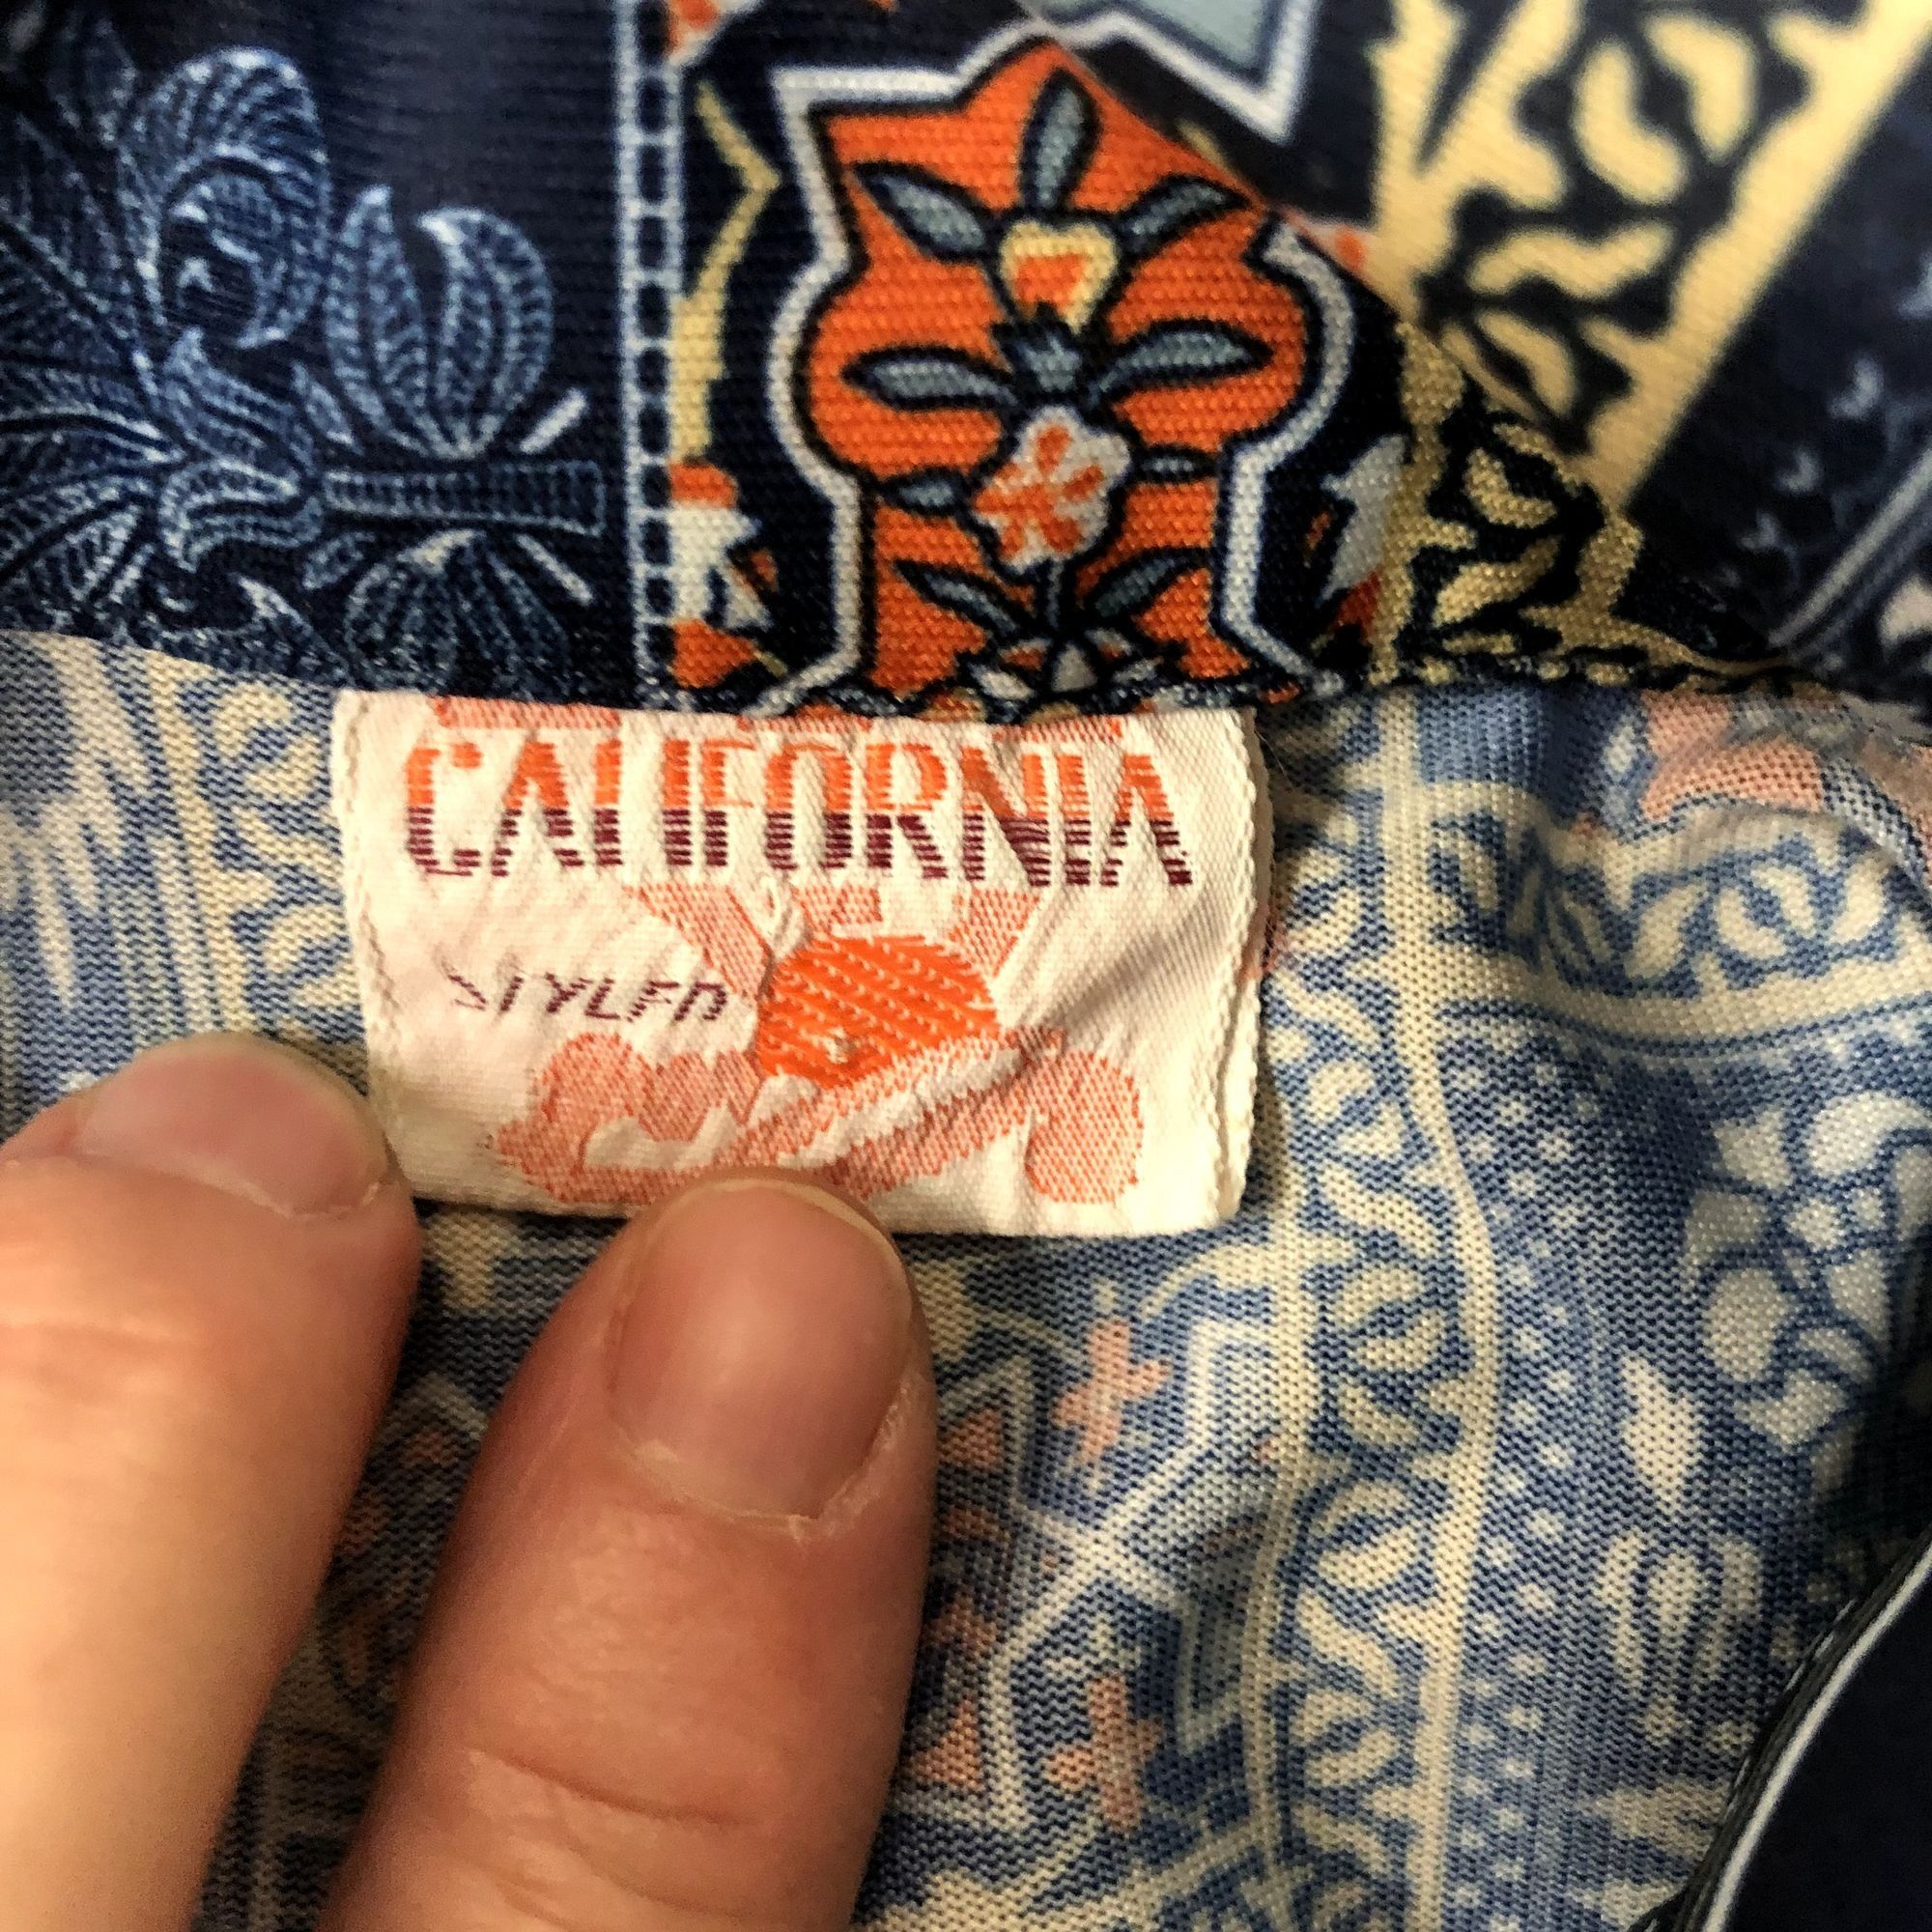 Unkwn 70's California Styled Men's MoD Blue Orange HIPPIE Shirt S Size US S / EU 44-46 / 1 - 7 Preview